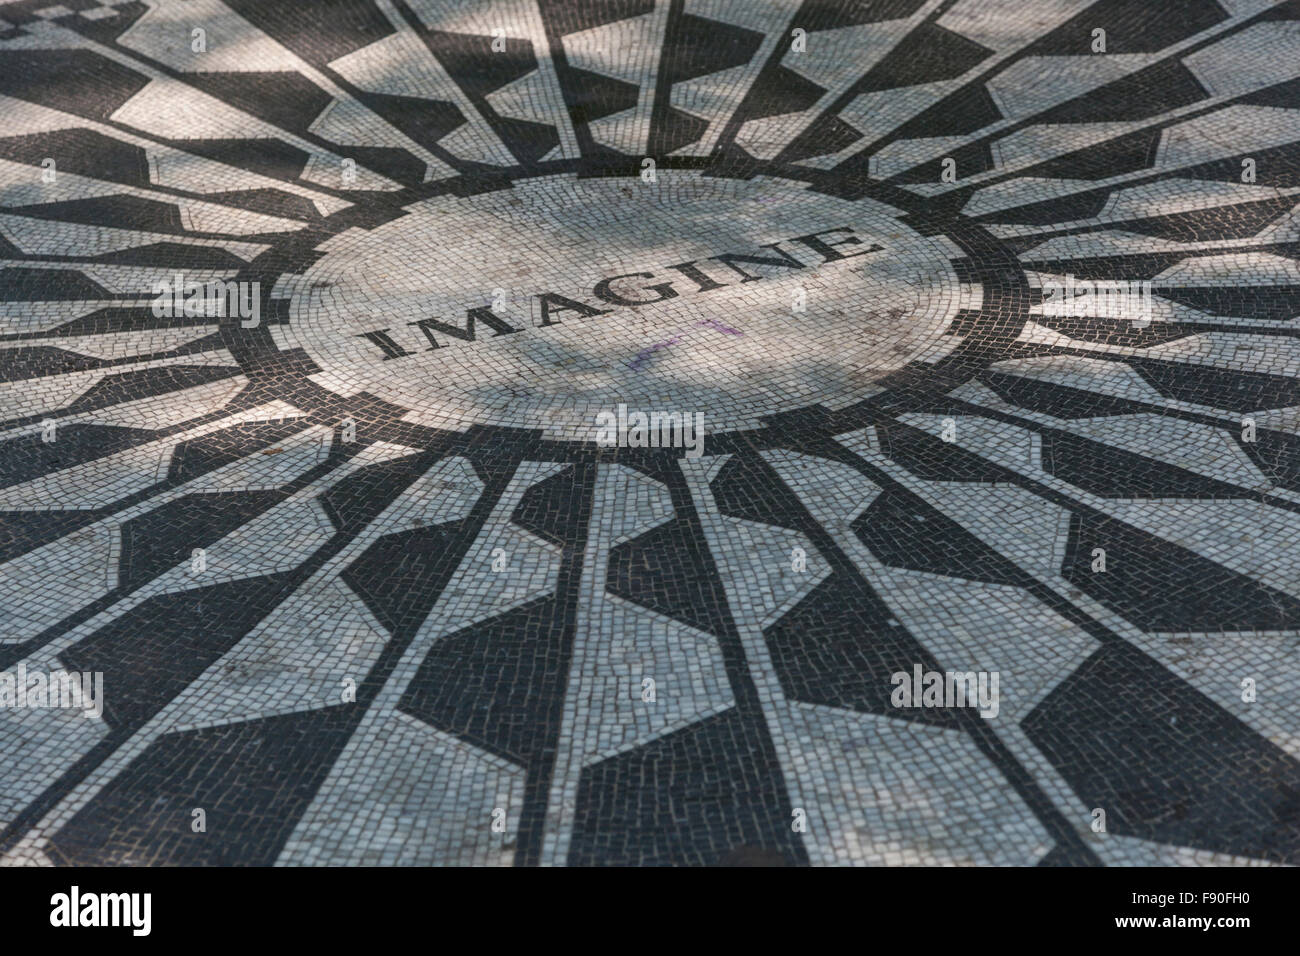 John Lennon Imagine memorial, dans Central Park, New York, USA Banque D'Images